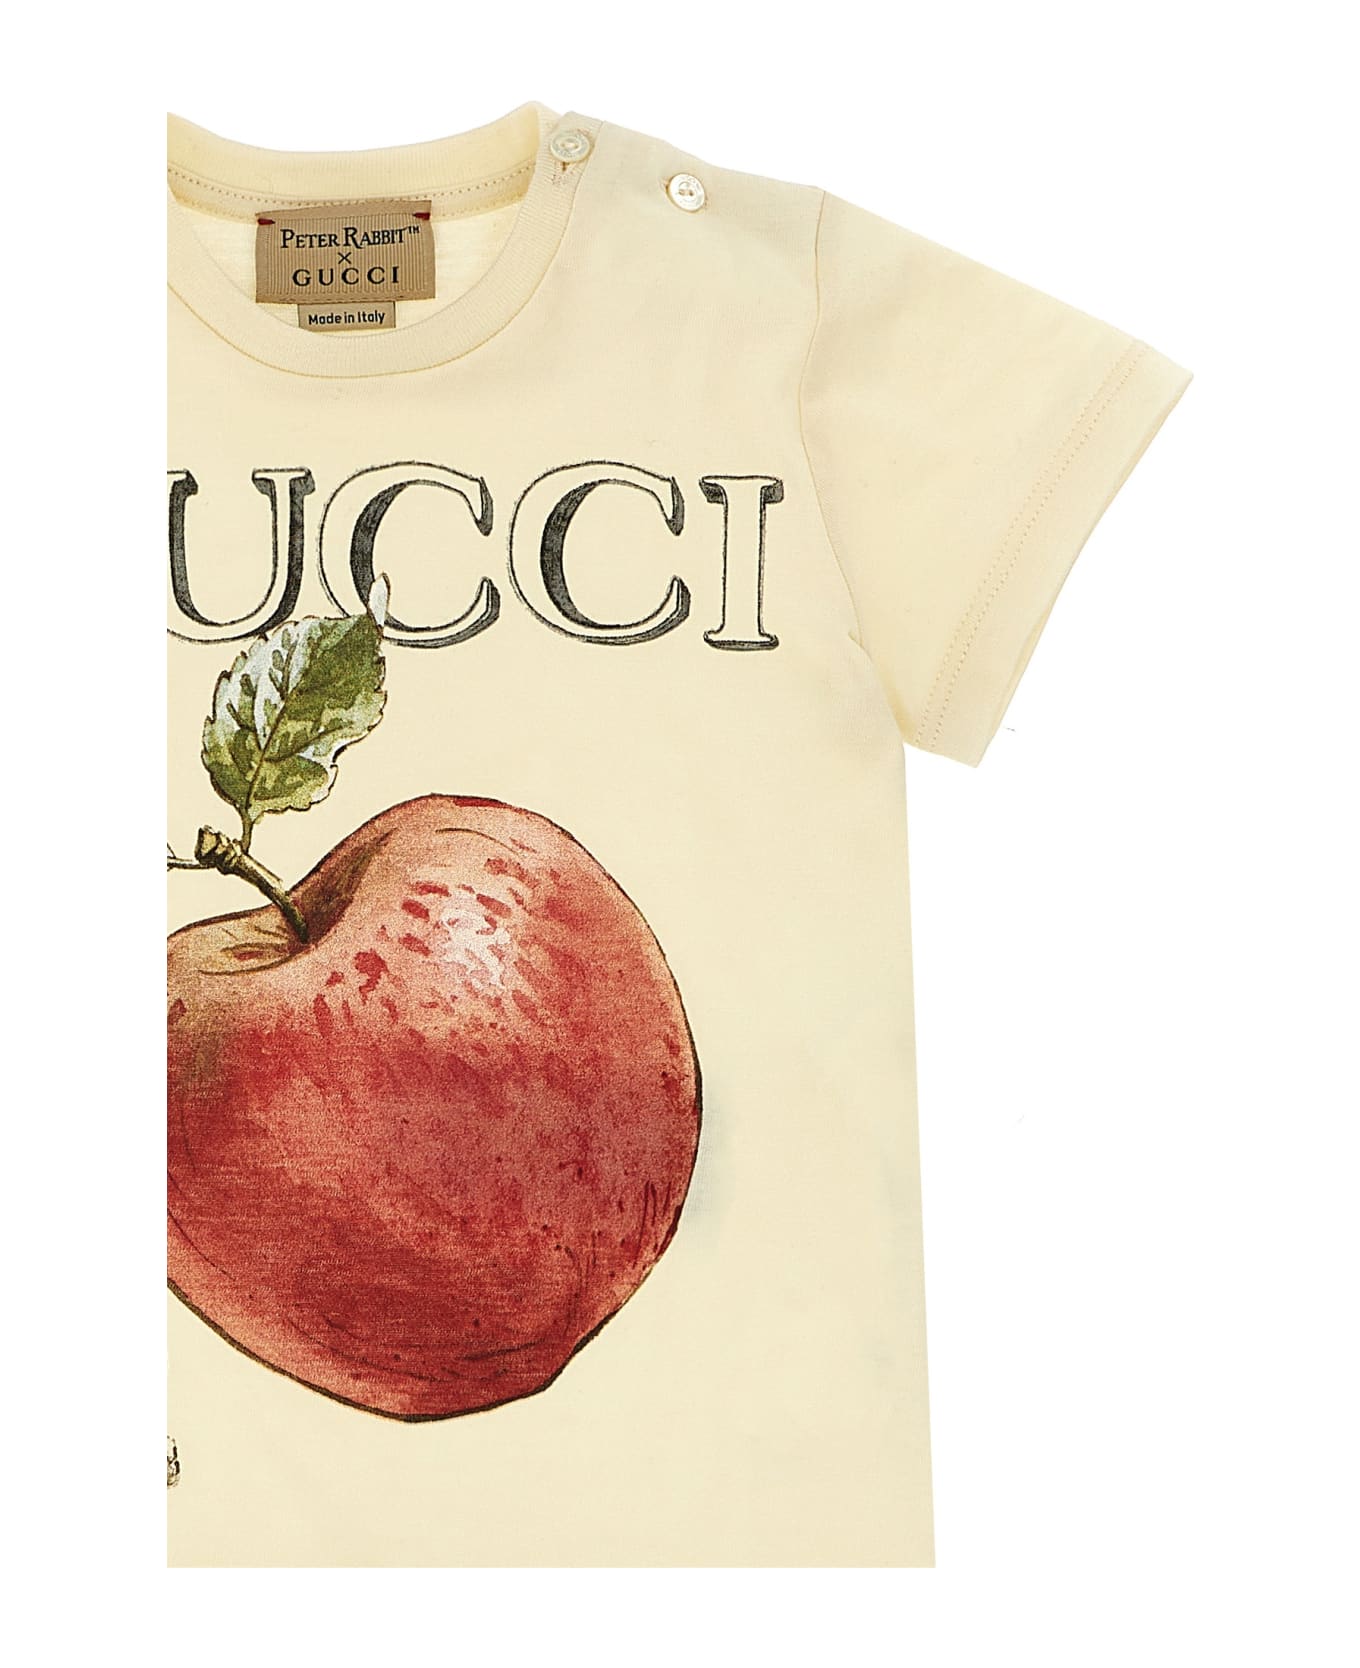 Gucci Printed T-shirt Peter Rabbit X Gucci - Beige